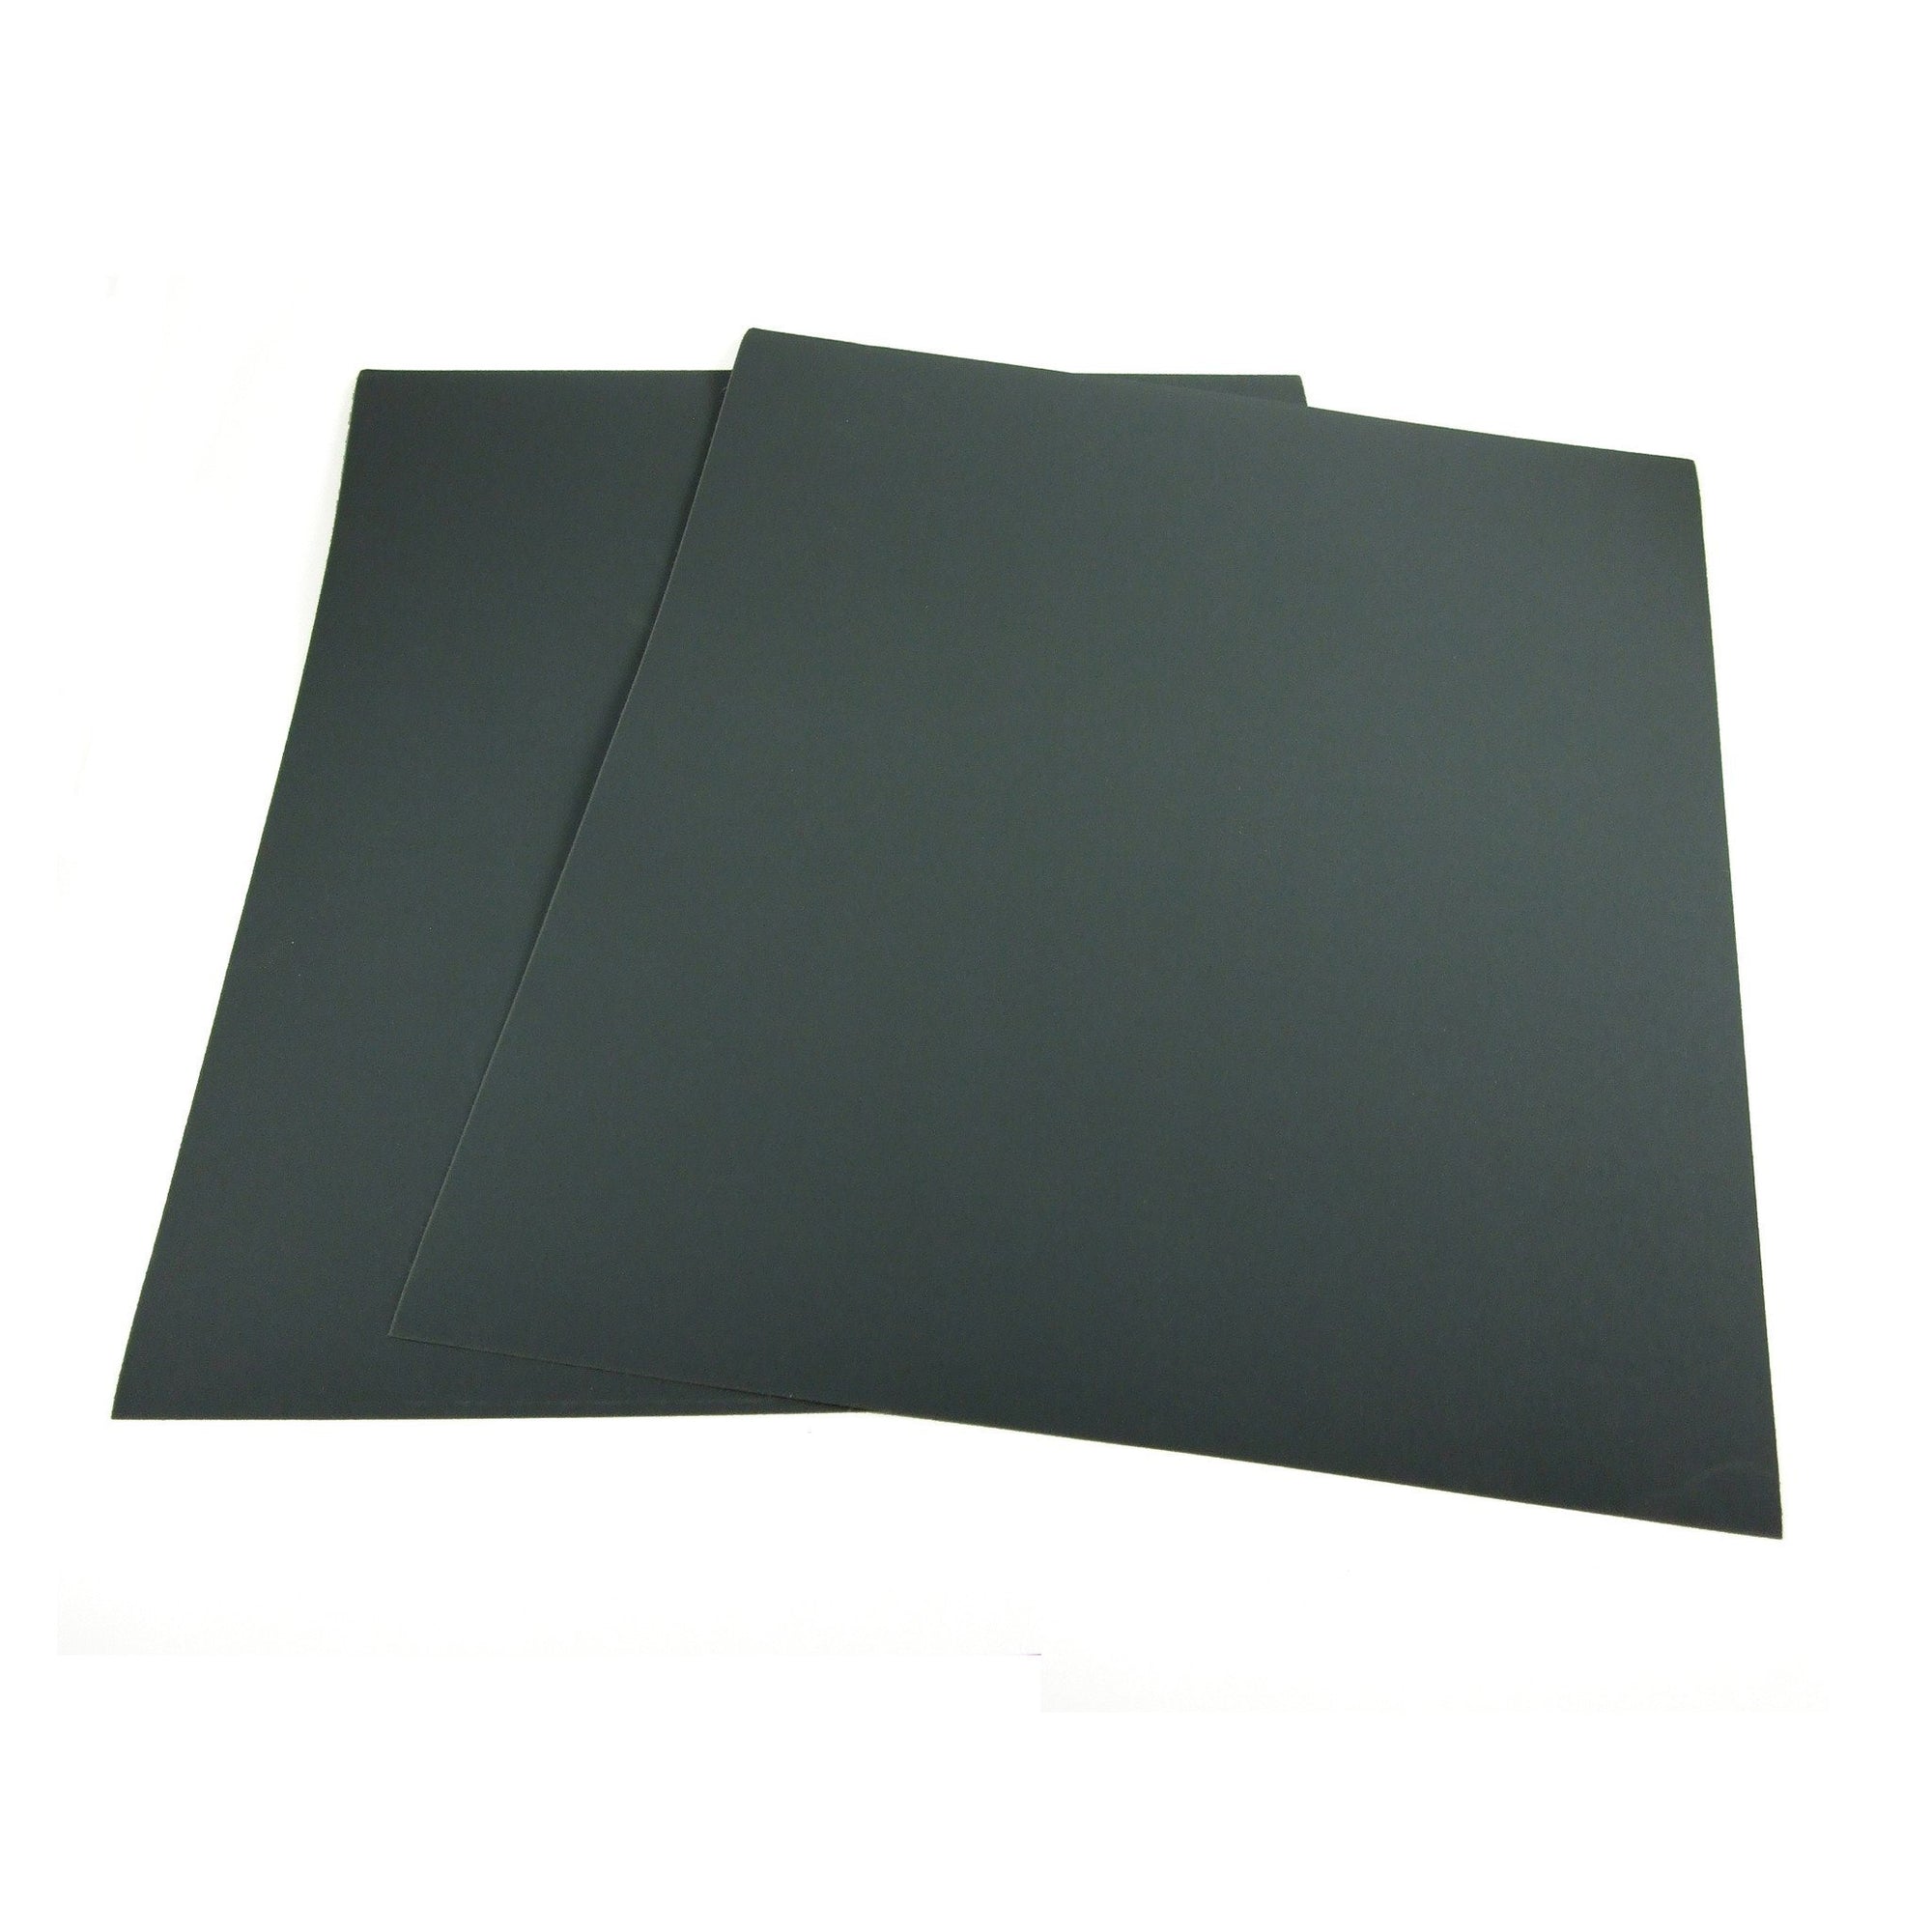 9 X 11 Inch Standard Waterproof Sandpaper Sheets, 100 Pack - Red Label Abrasives